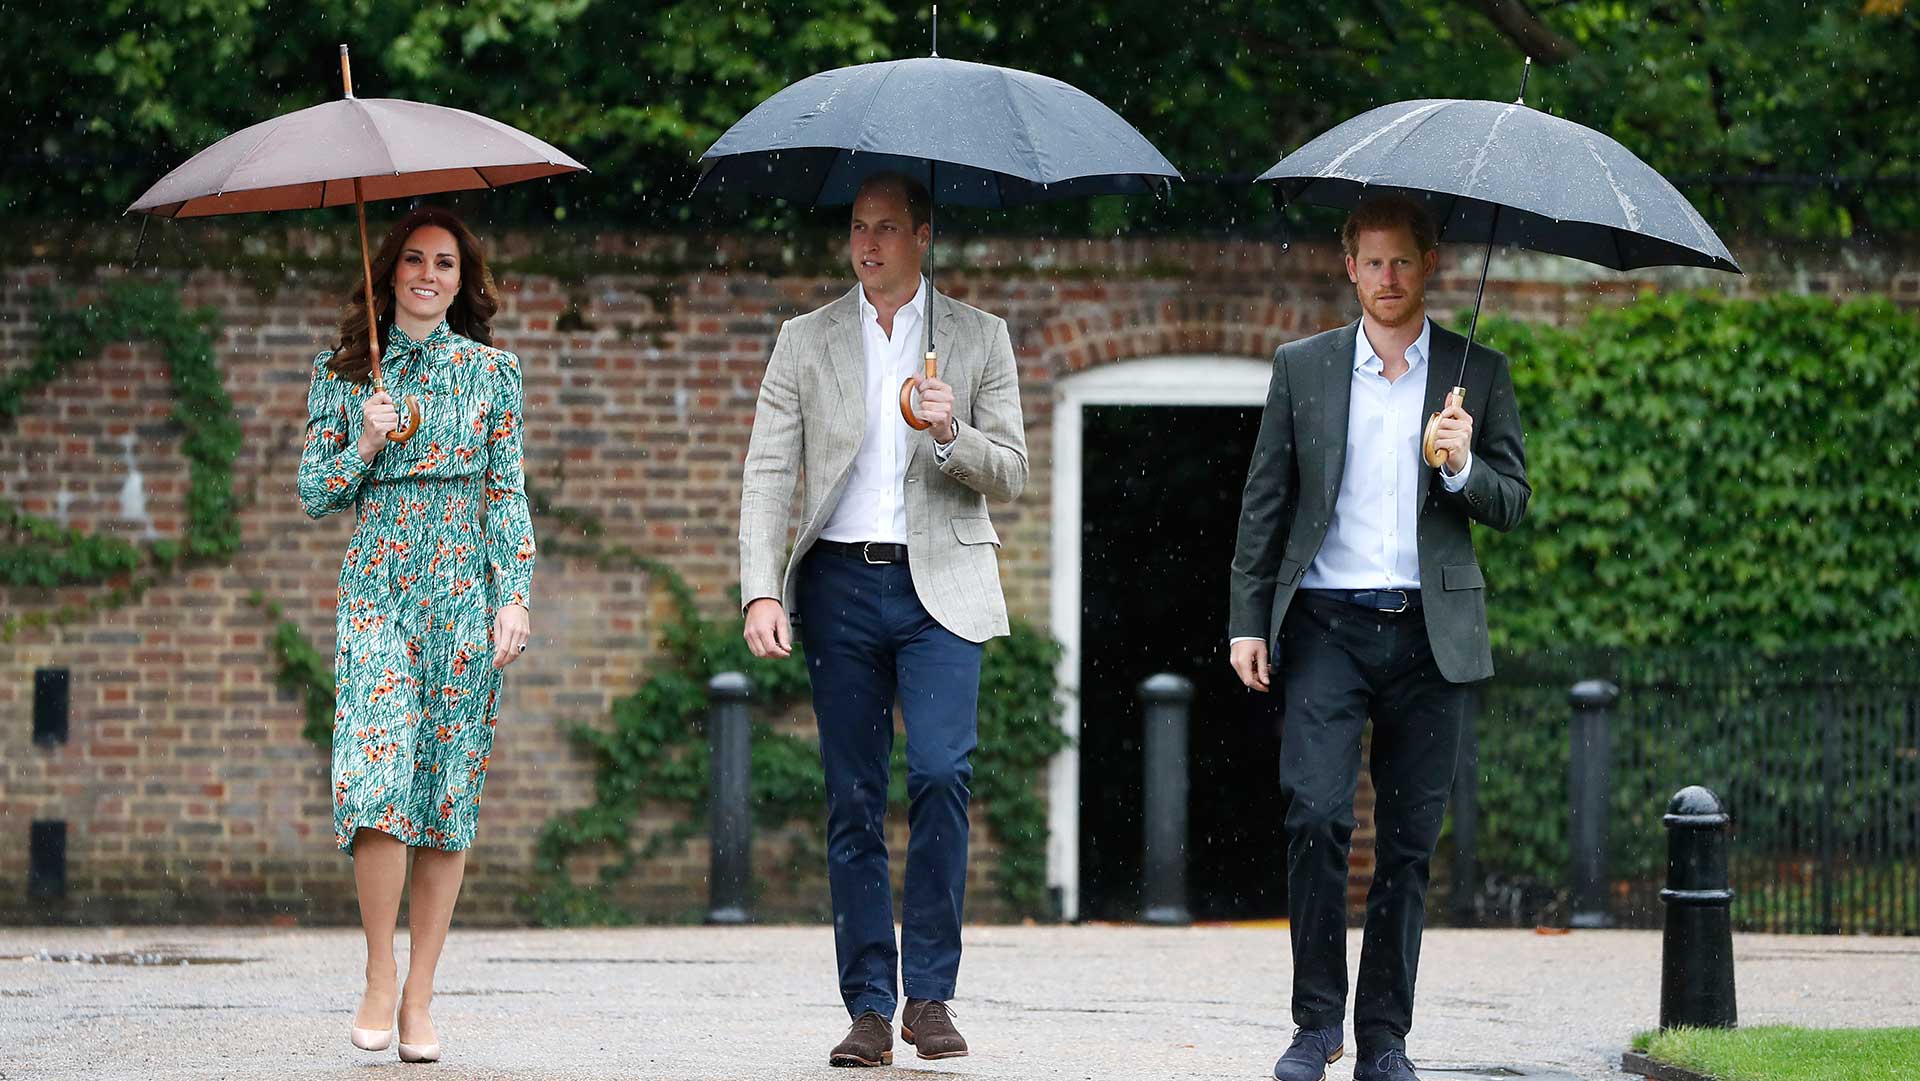 Prince William, Duchess Catherine and Prince Harry visit Princess Diana’s memorial